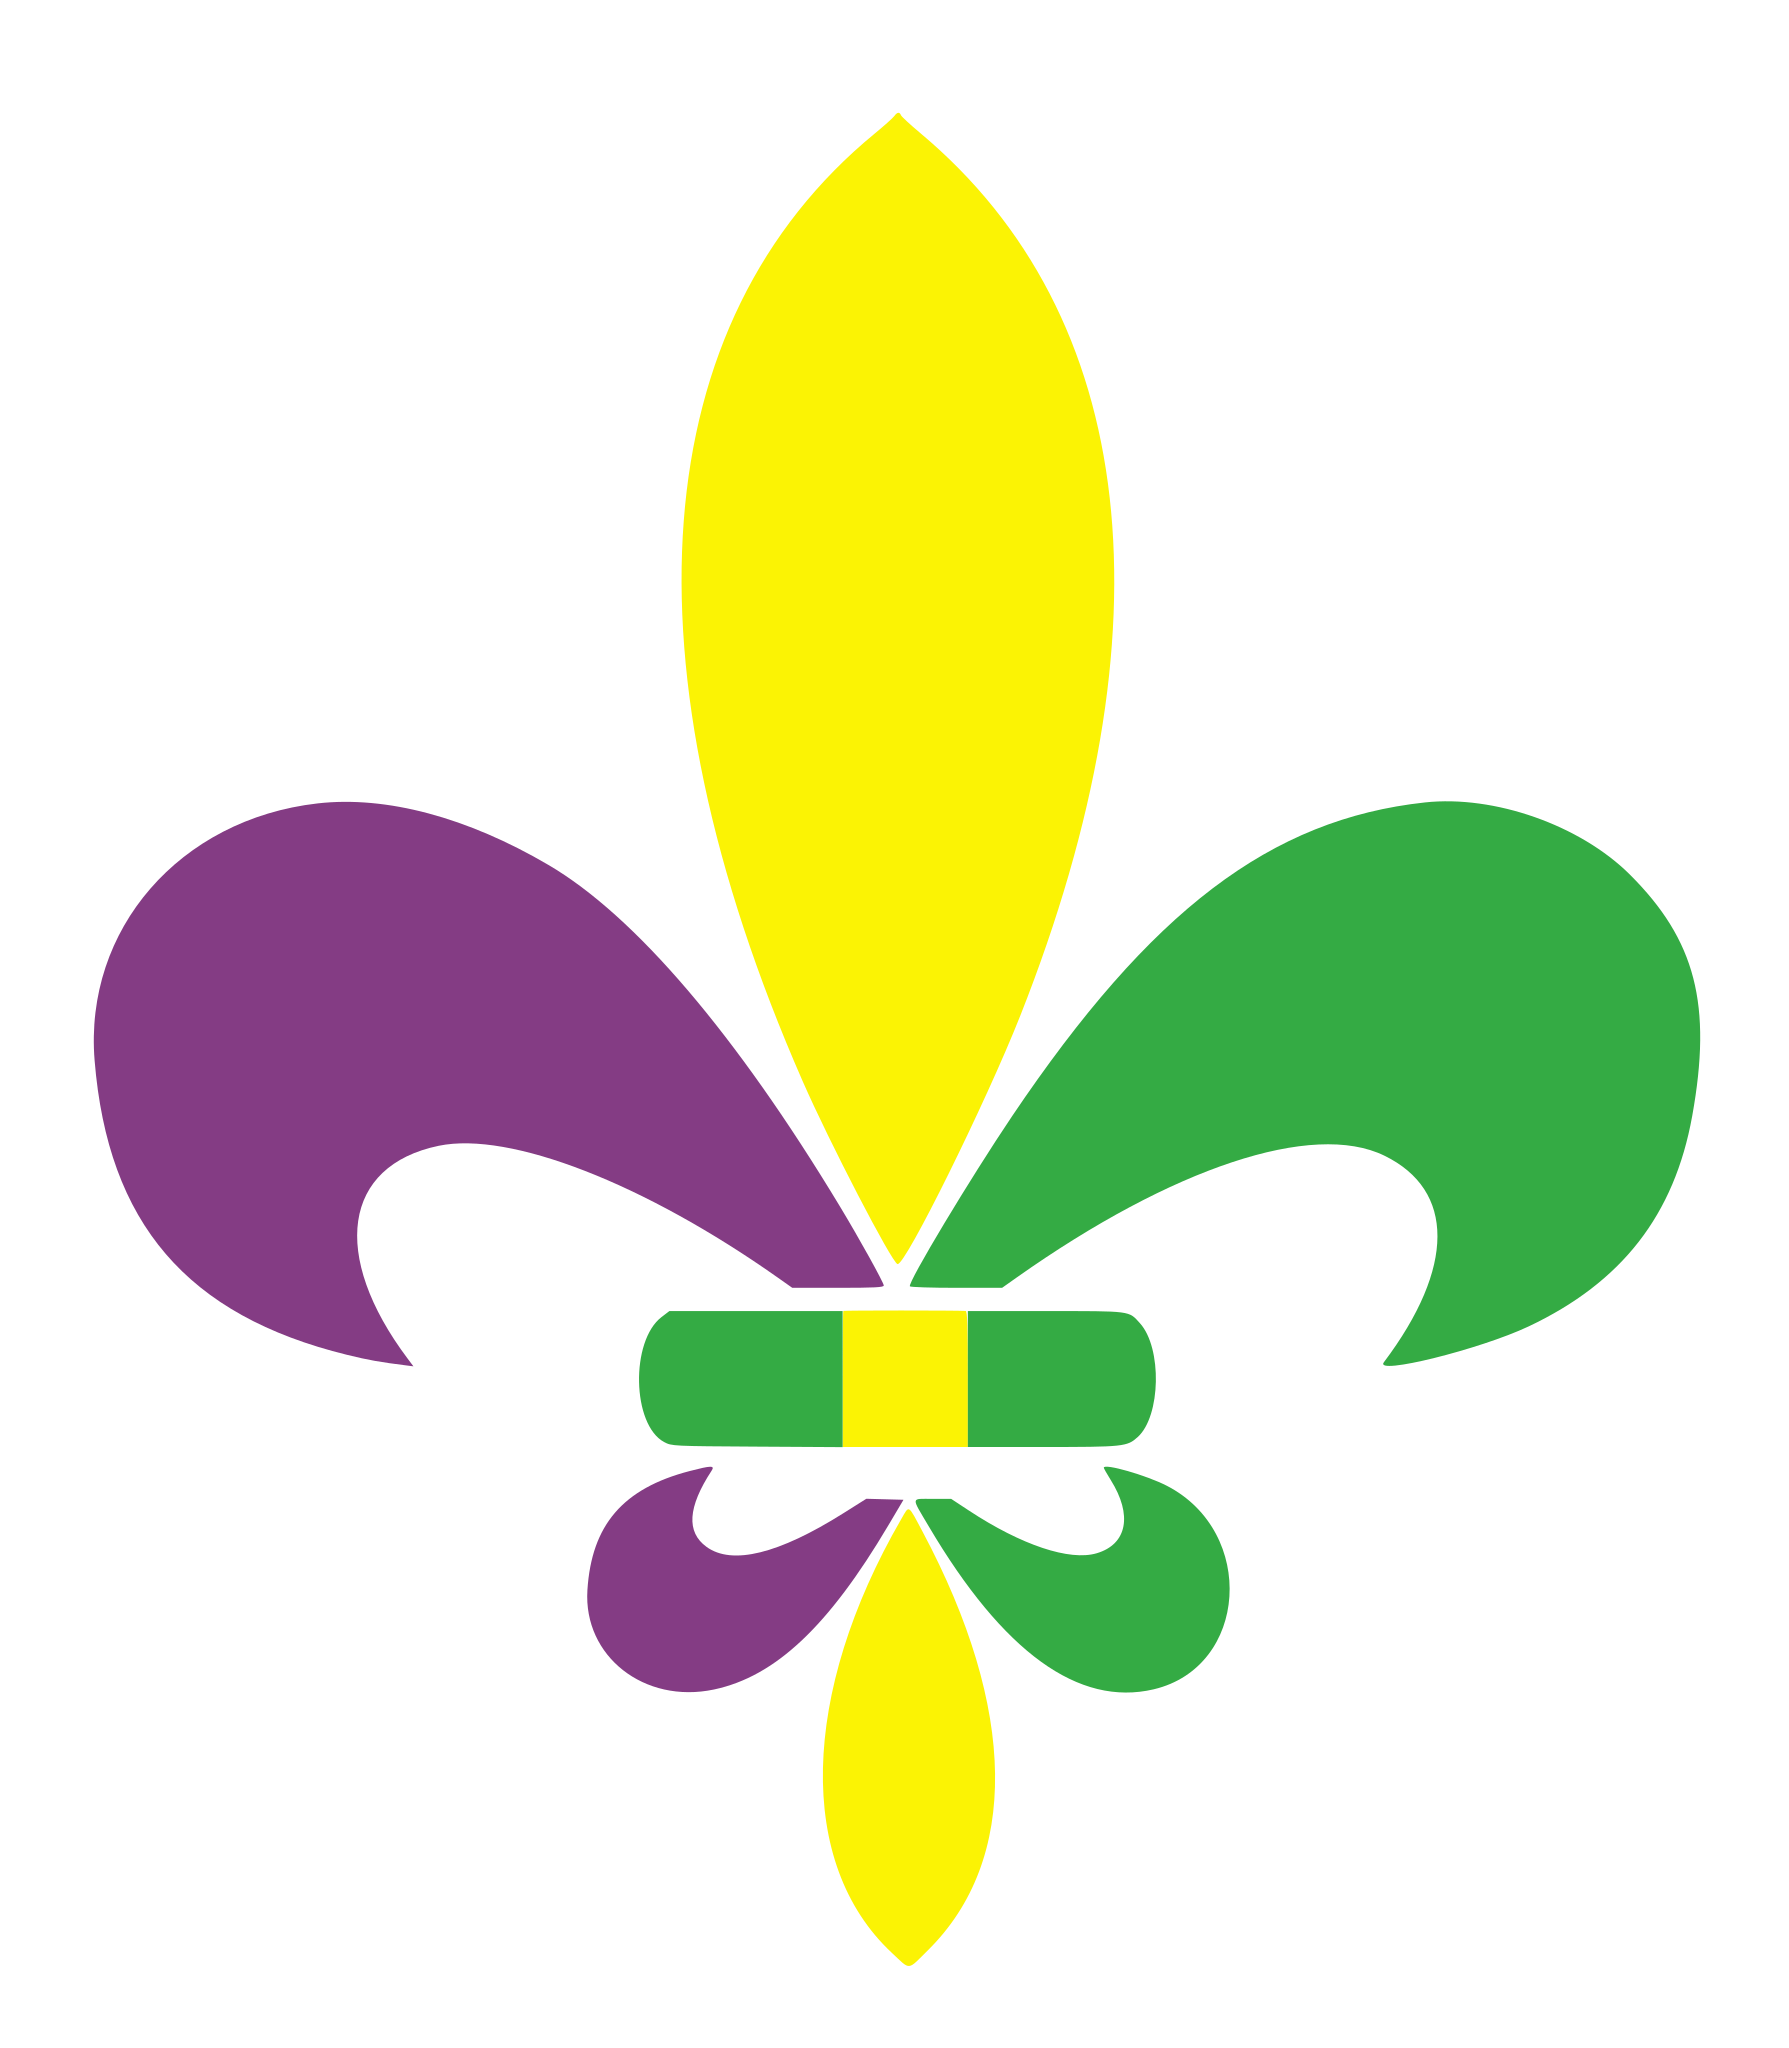 Fleur-de-lis - Wikipedia